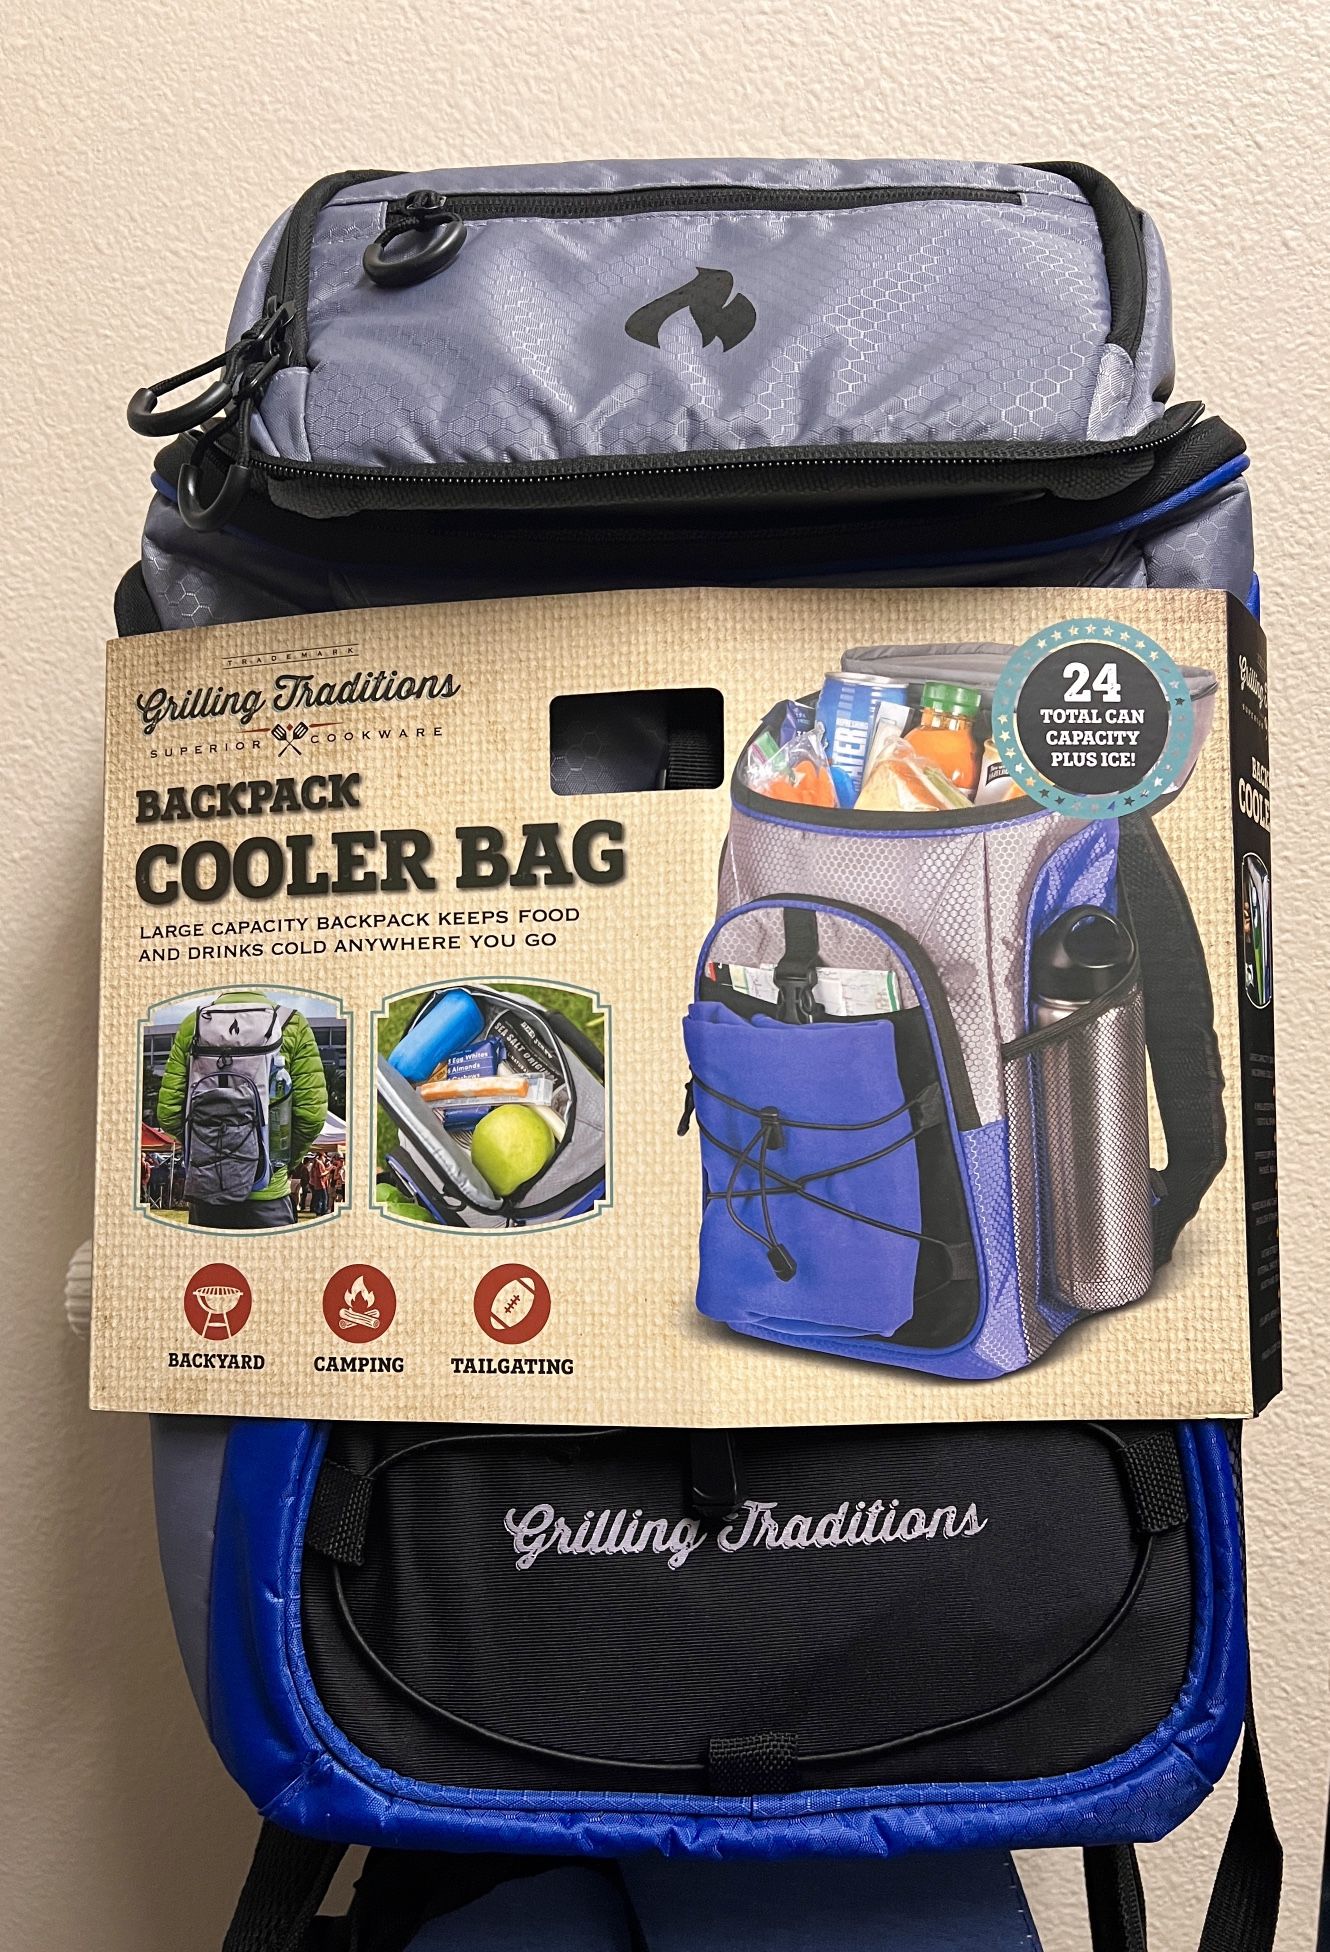 Grilling Traditions Backpack Cooler Bag